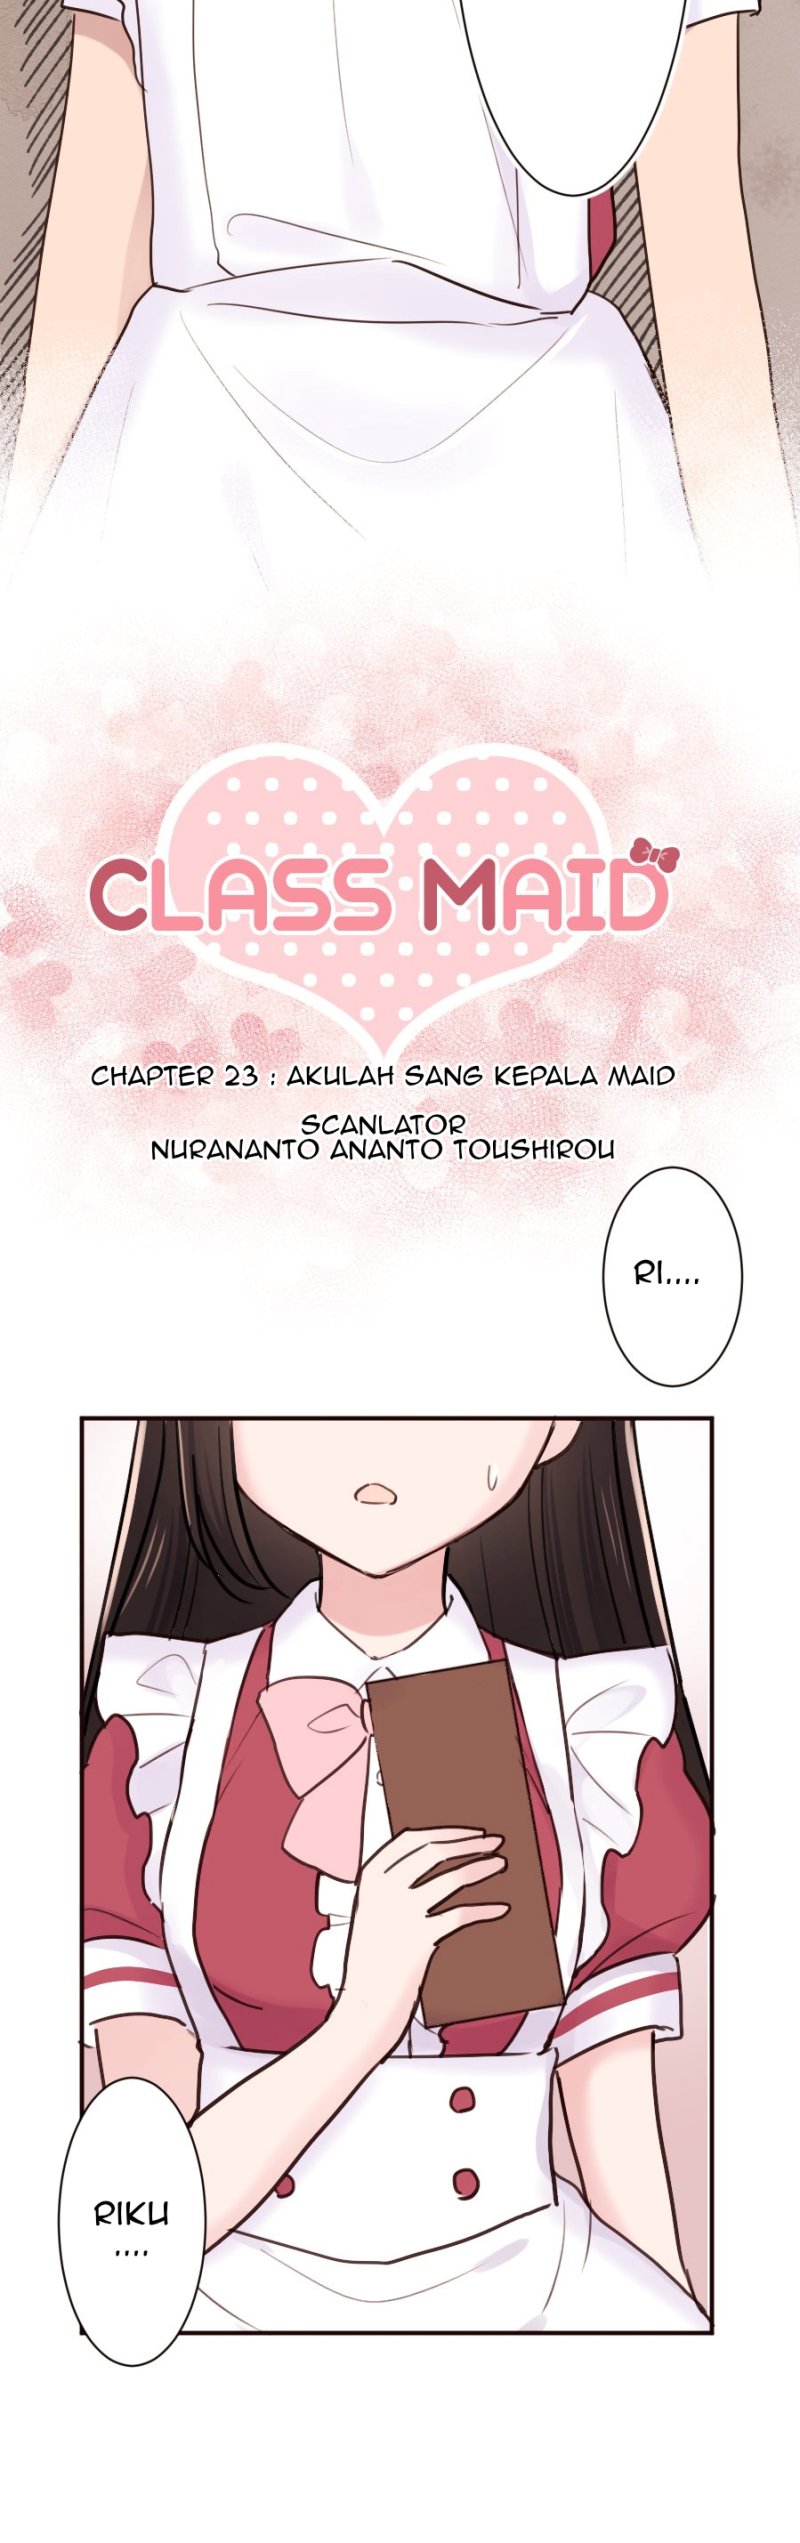 Class Maid (shimamura) Chapter 23